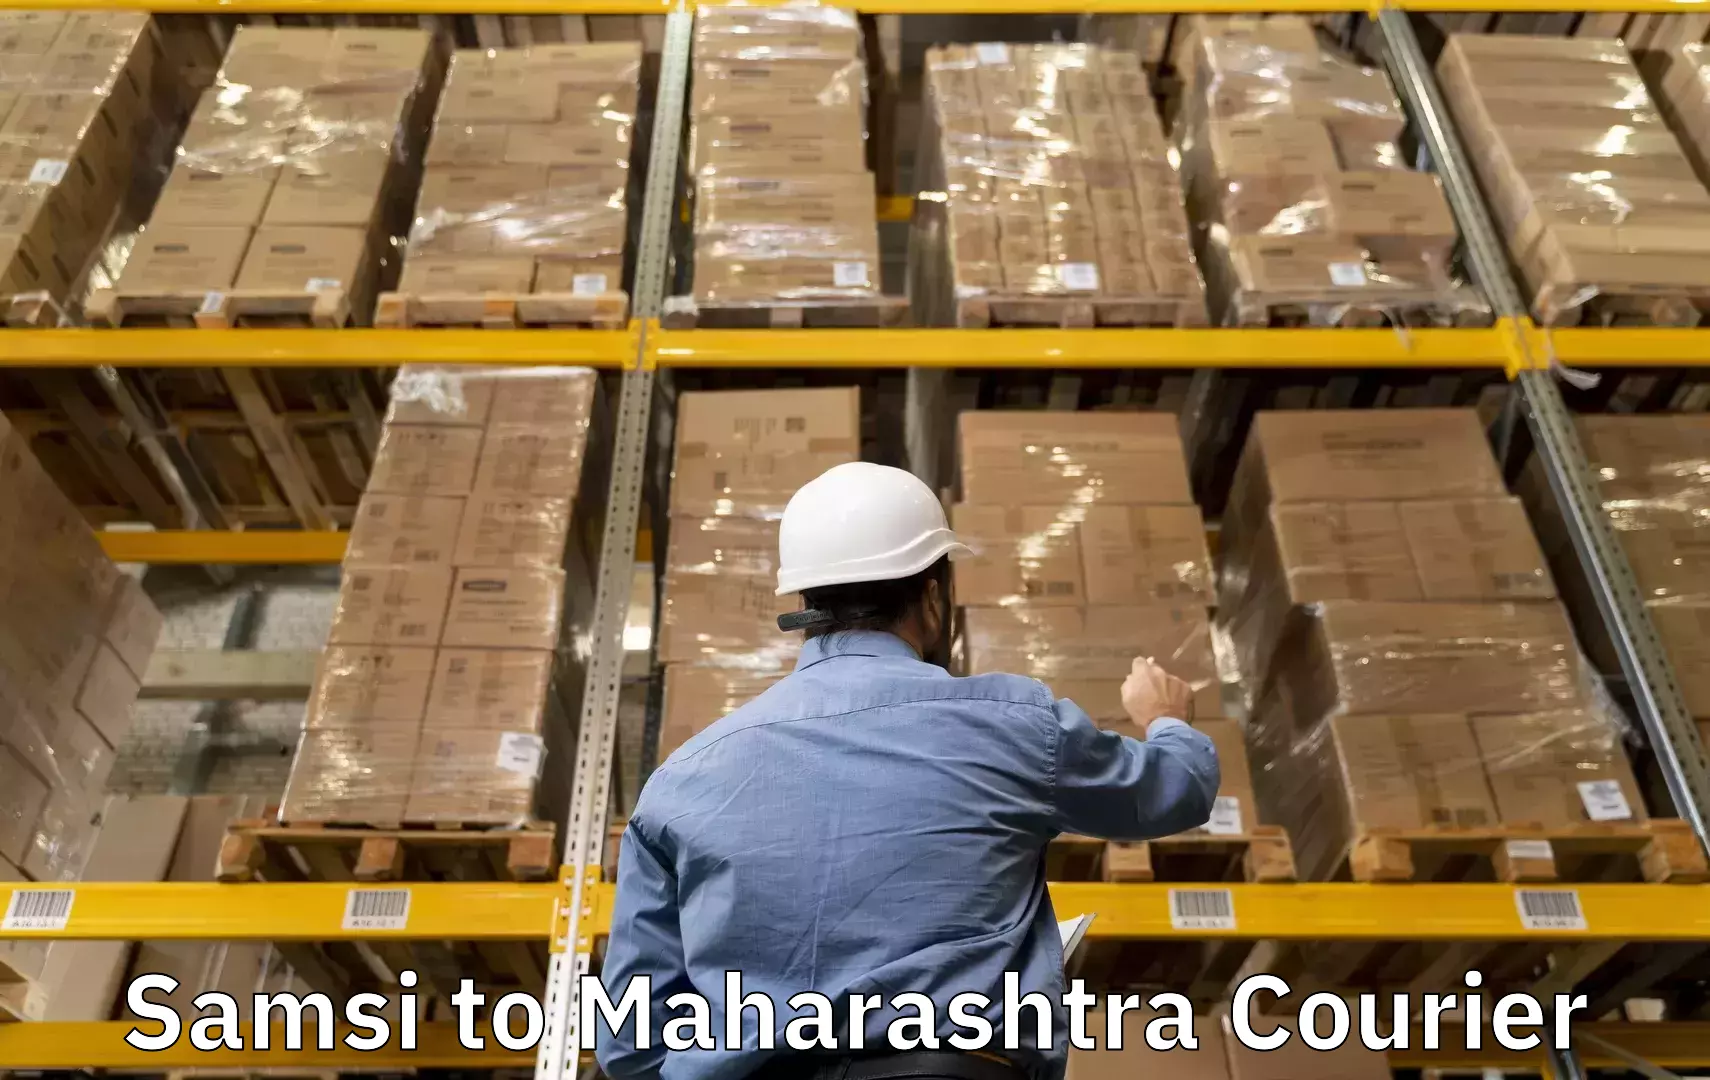 Luggage transport consultancy Samsi to Maharashtra